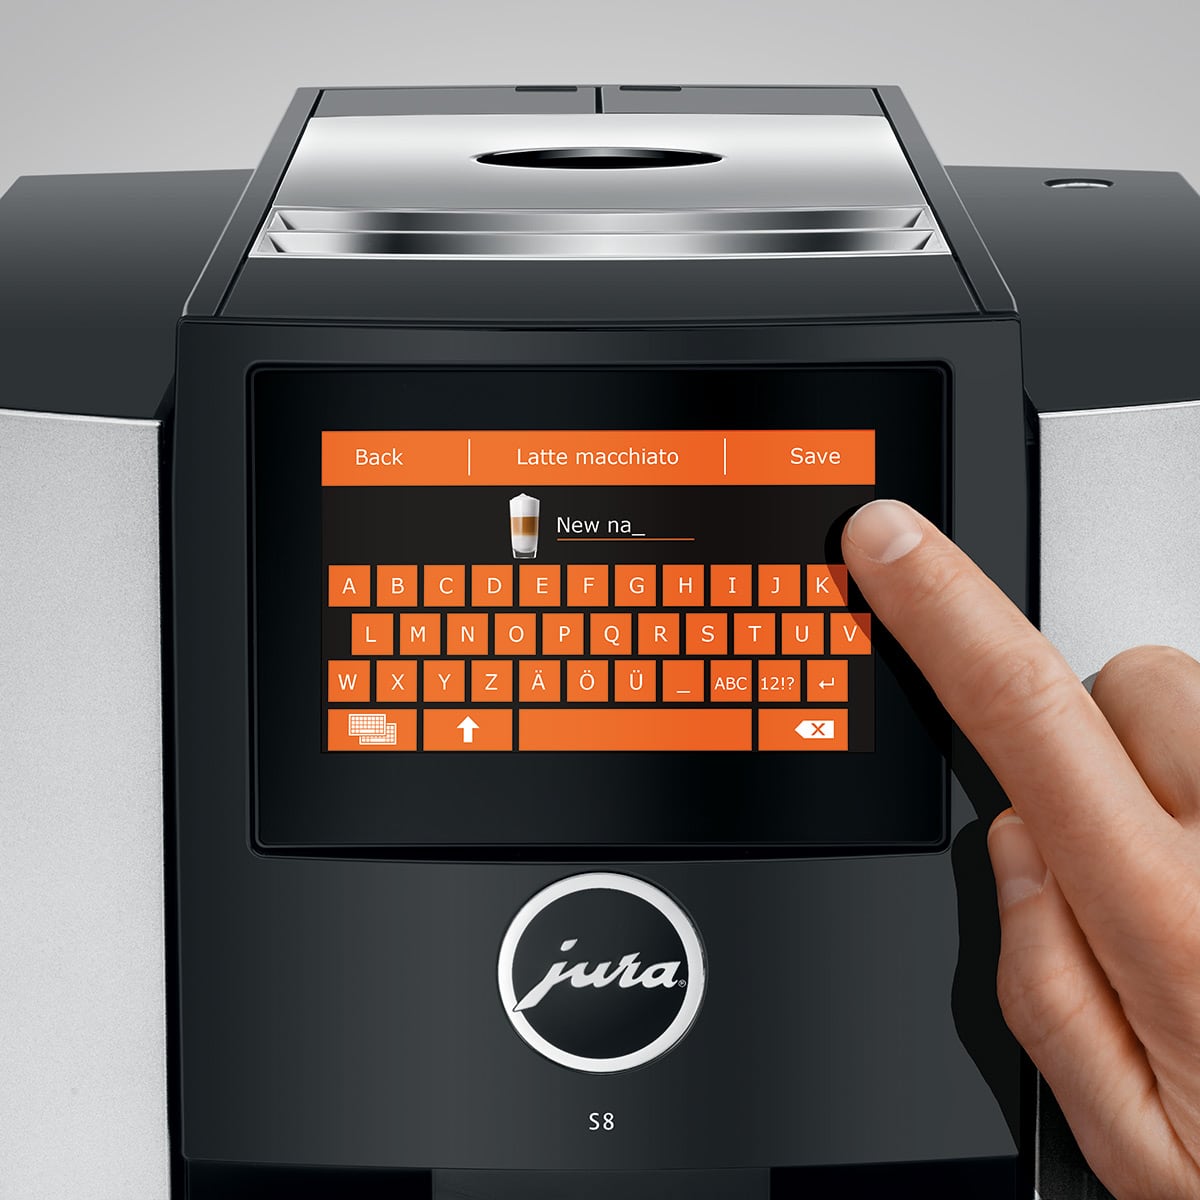 JURA S8 Fully Automatic Espresso & Coffee Machine